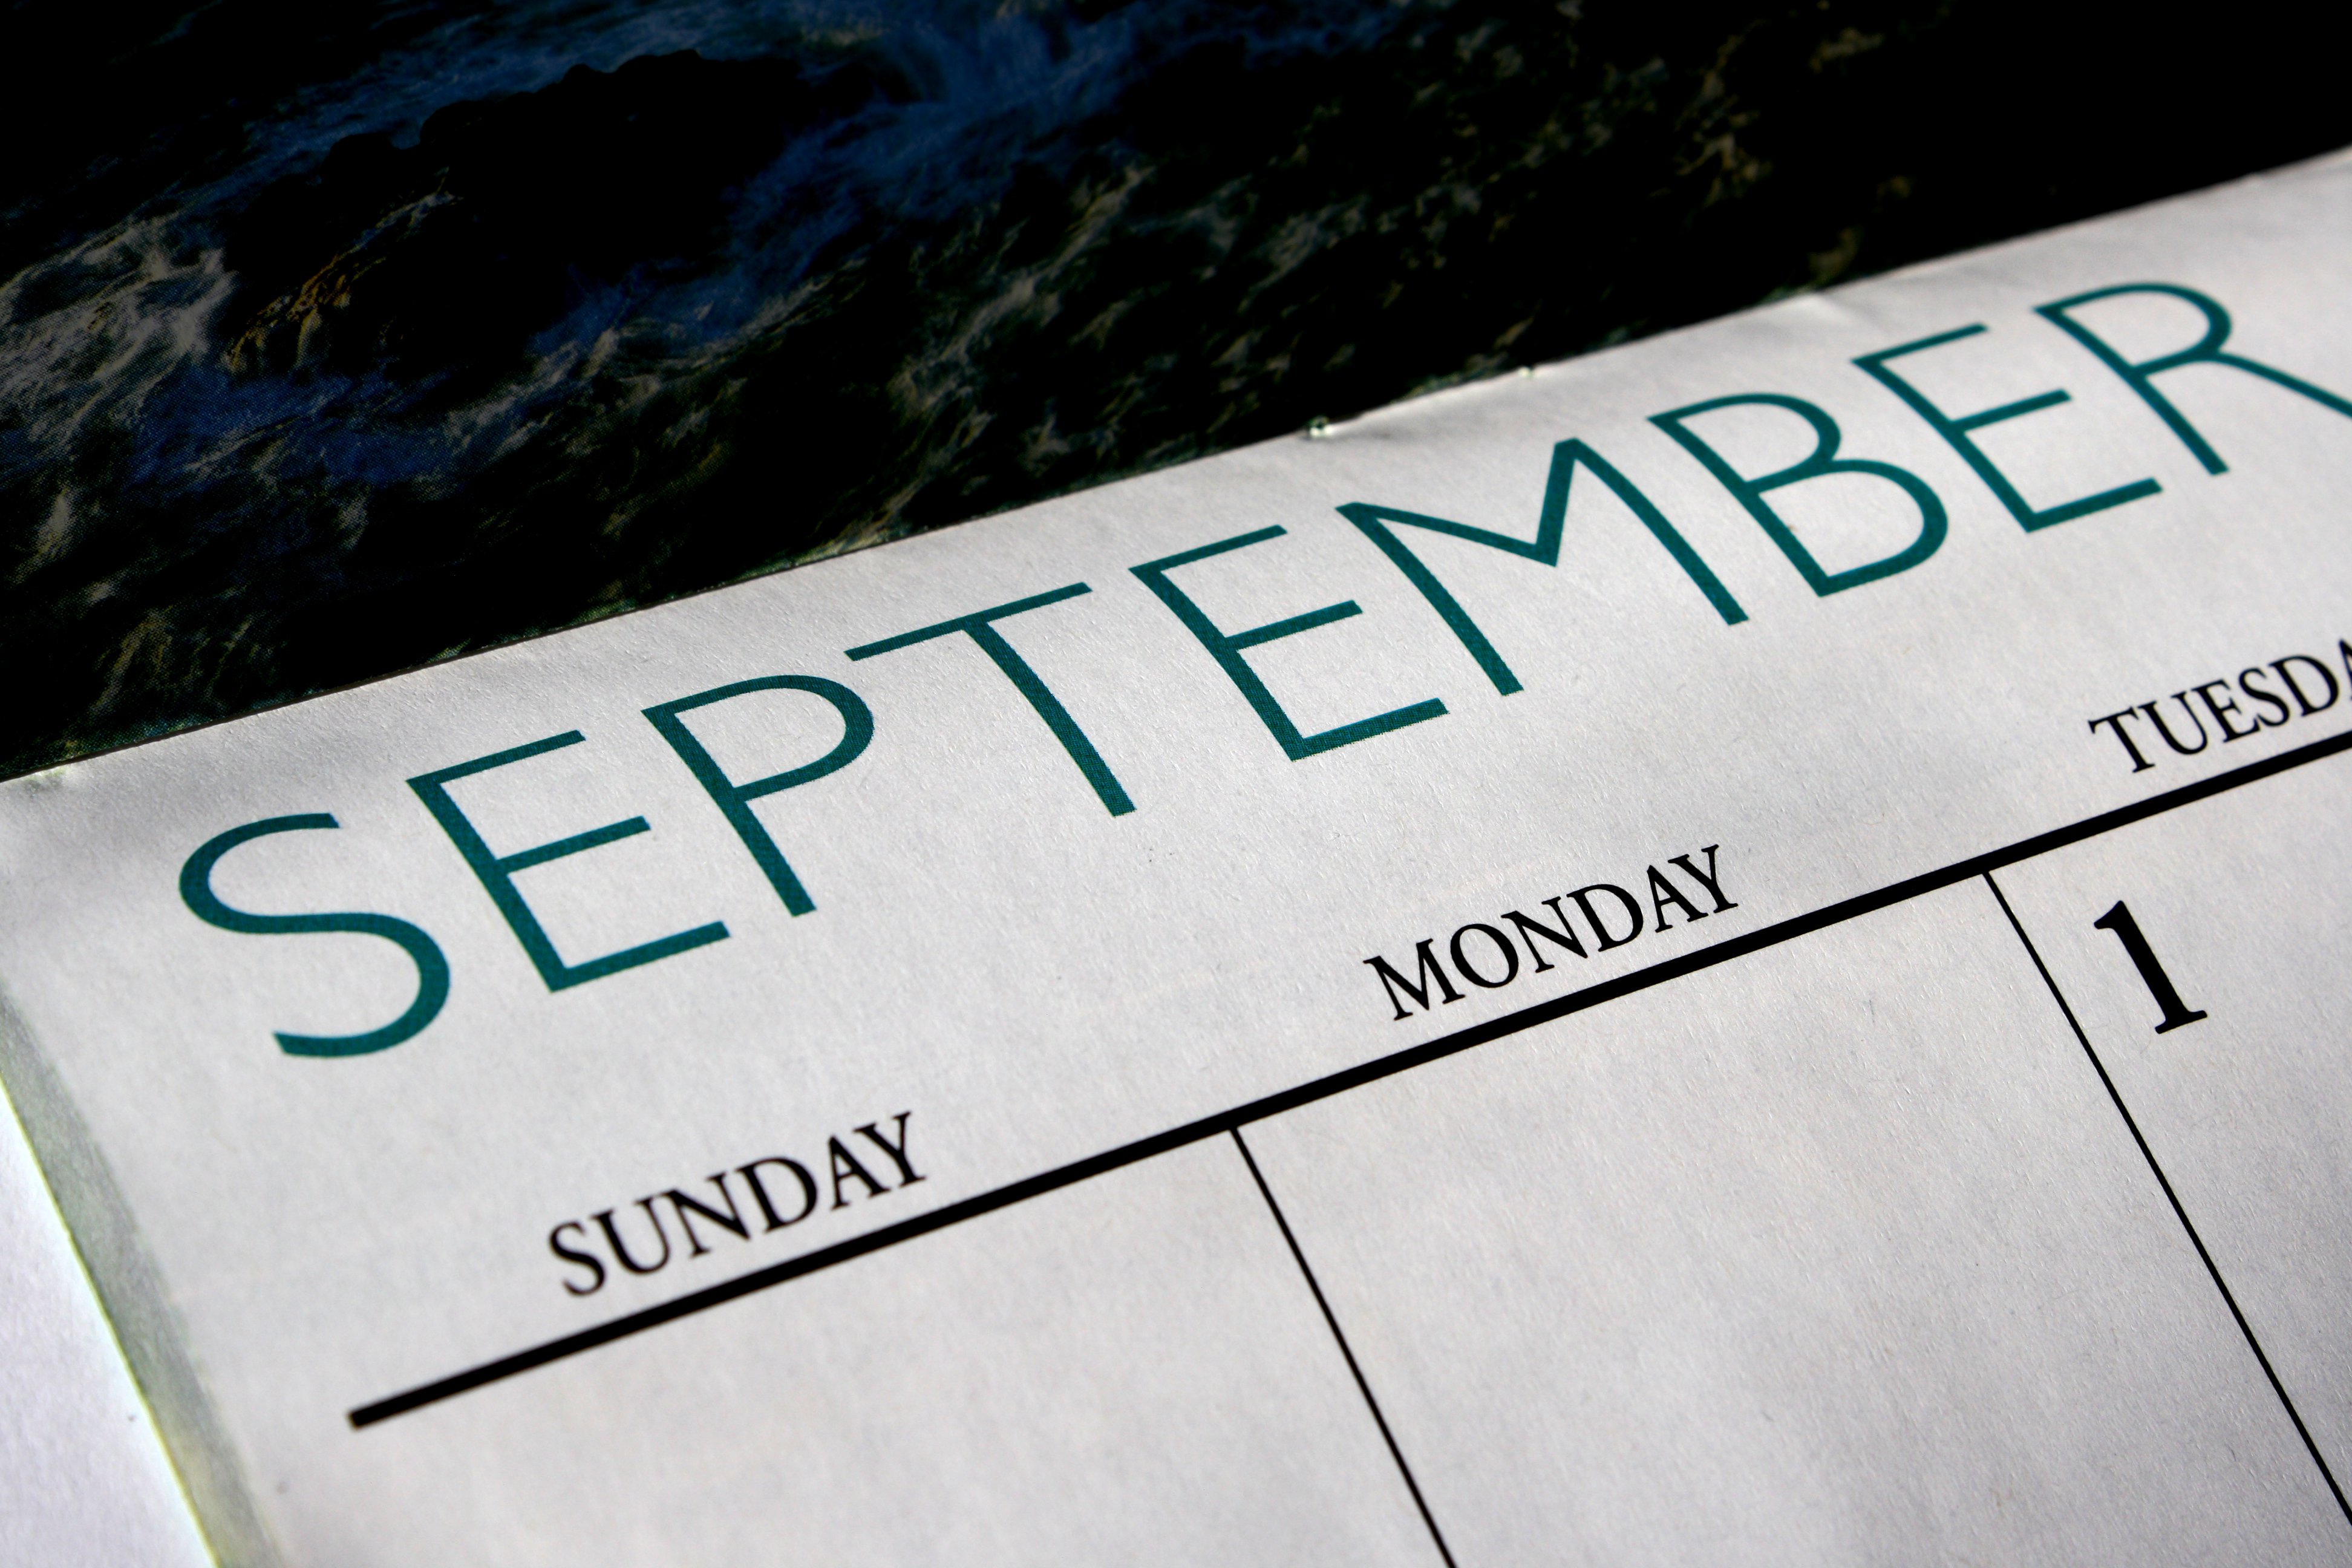 September Calendar Picture Free Photograph Photos Public Domain